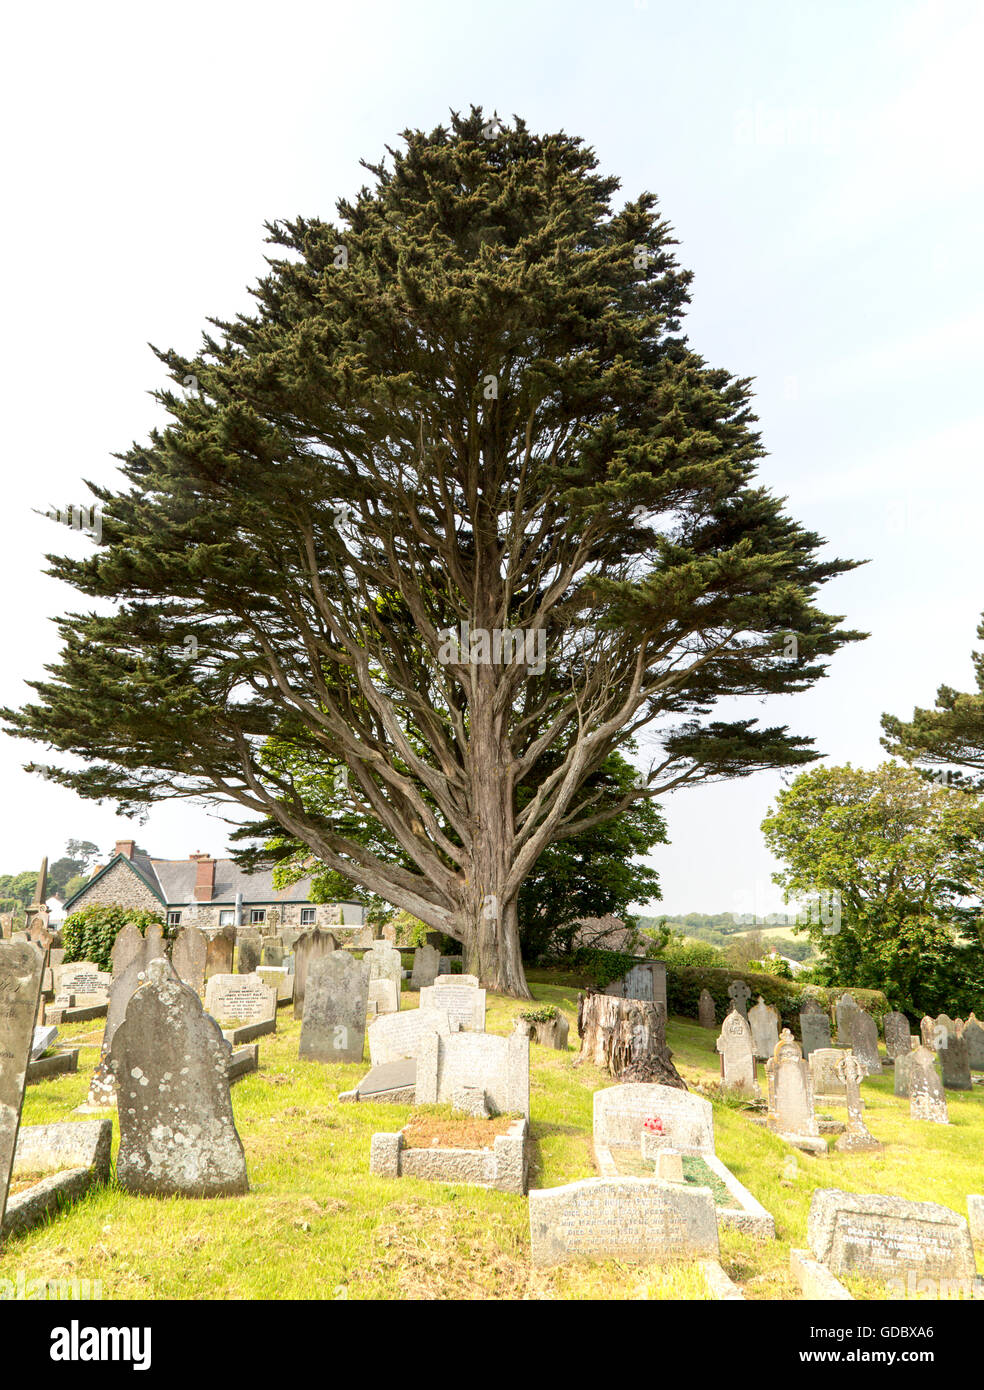 Gravestones in churchyard parish church at St Keverne, Lizard Peninsula, Cornwall, England, UK Stock Photo